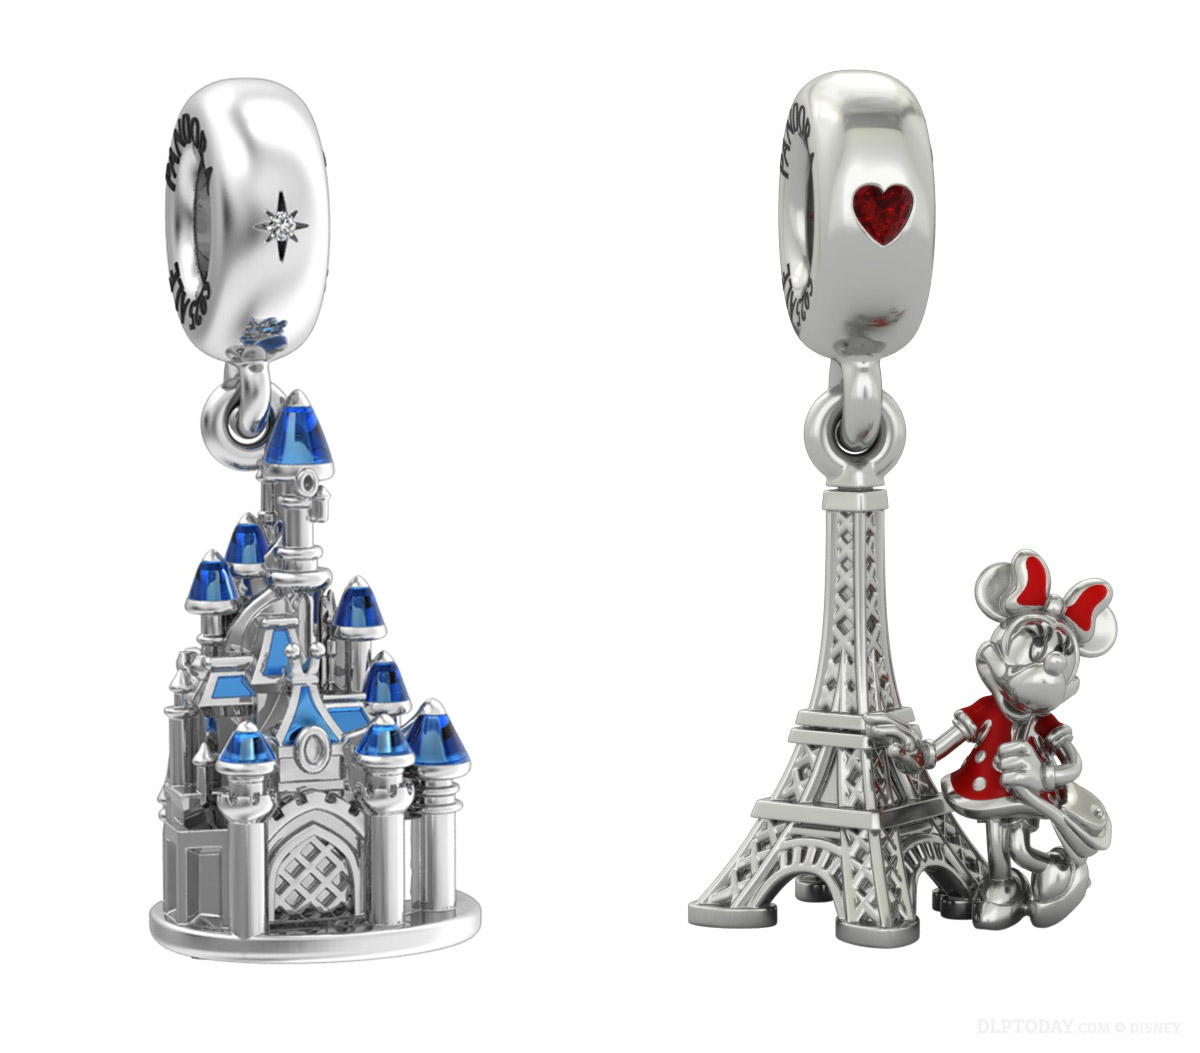 Pandora signs Disneyland Paris deal for exclusive new